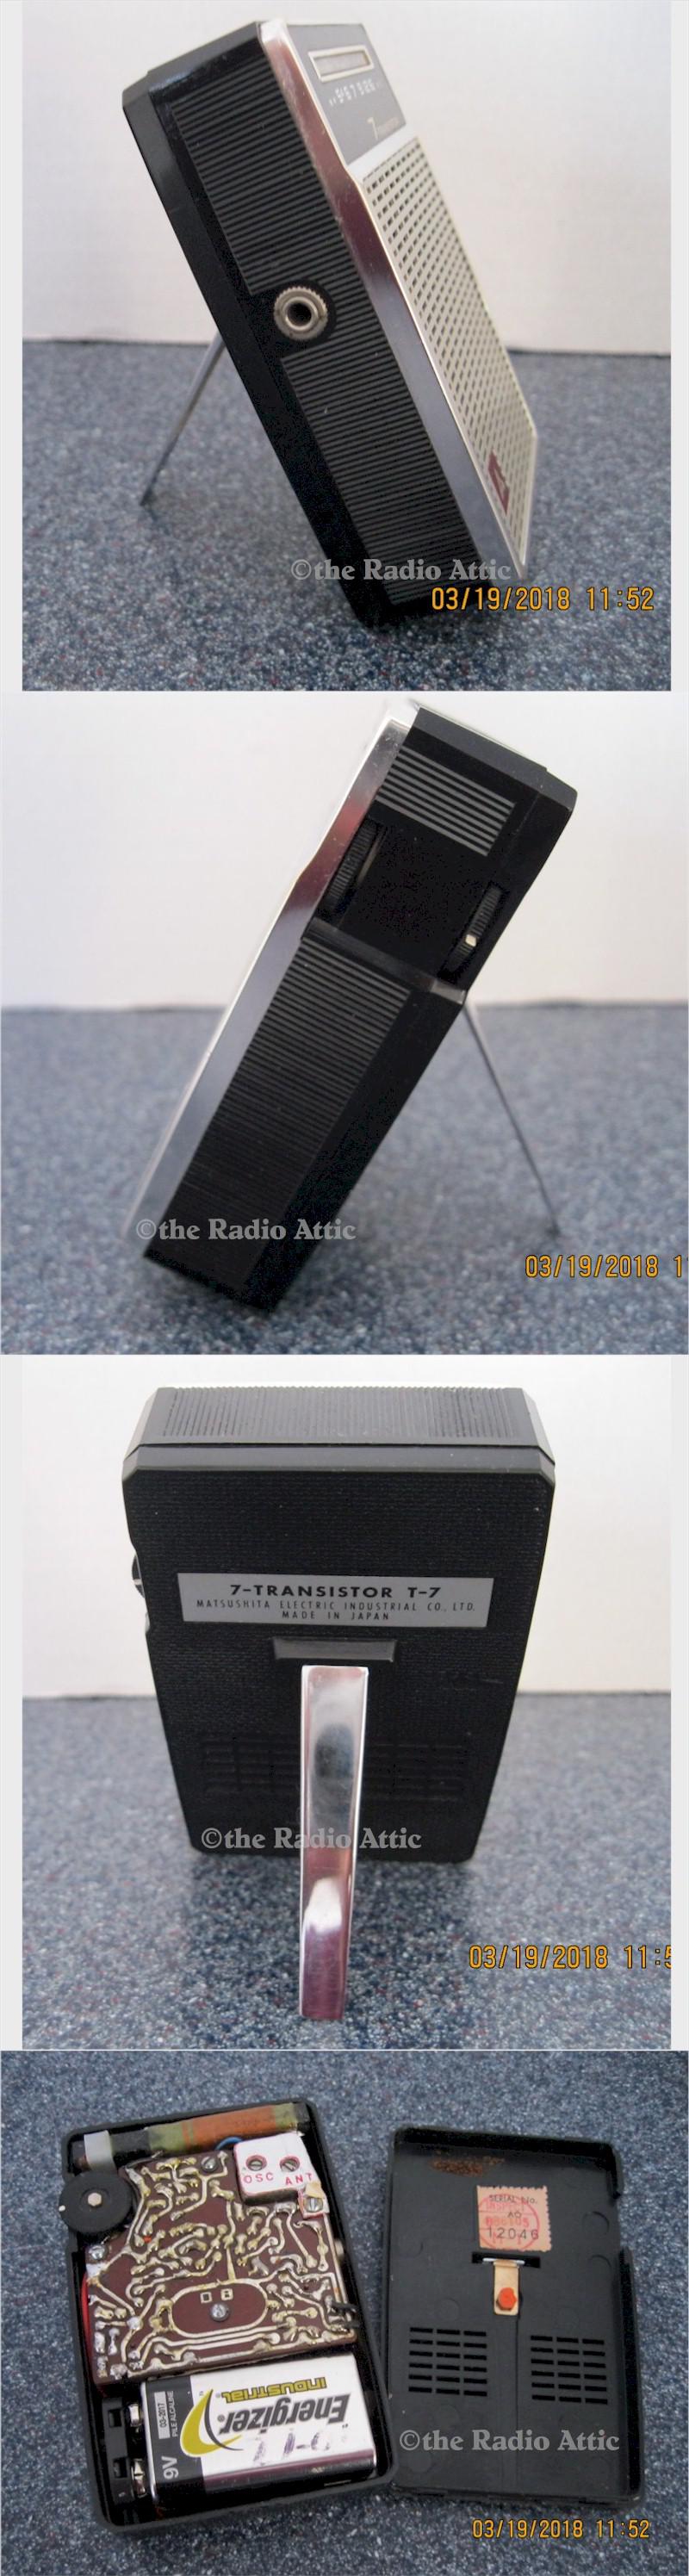 Matsushita T-7 Pocket Transistor Radio (1962)